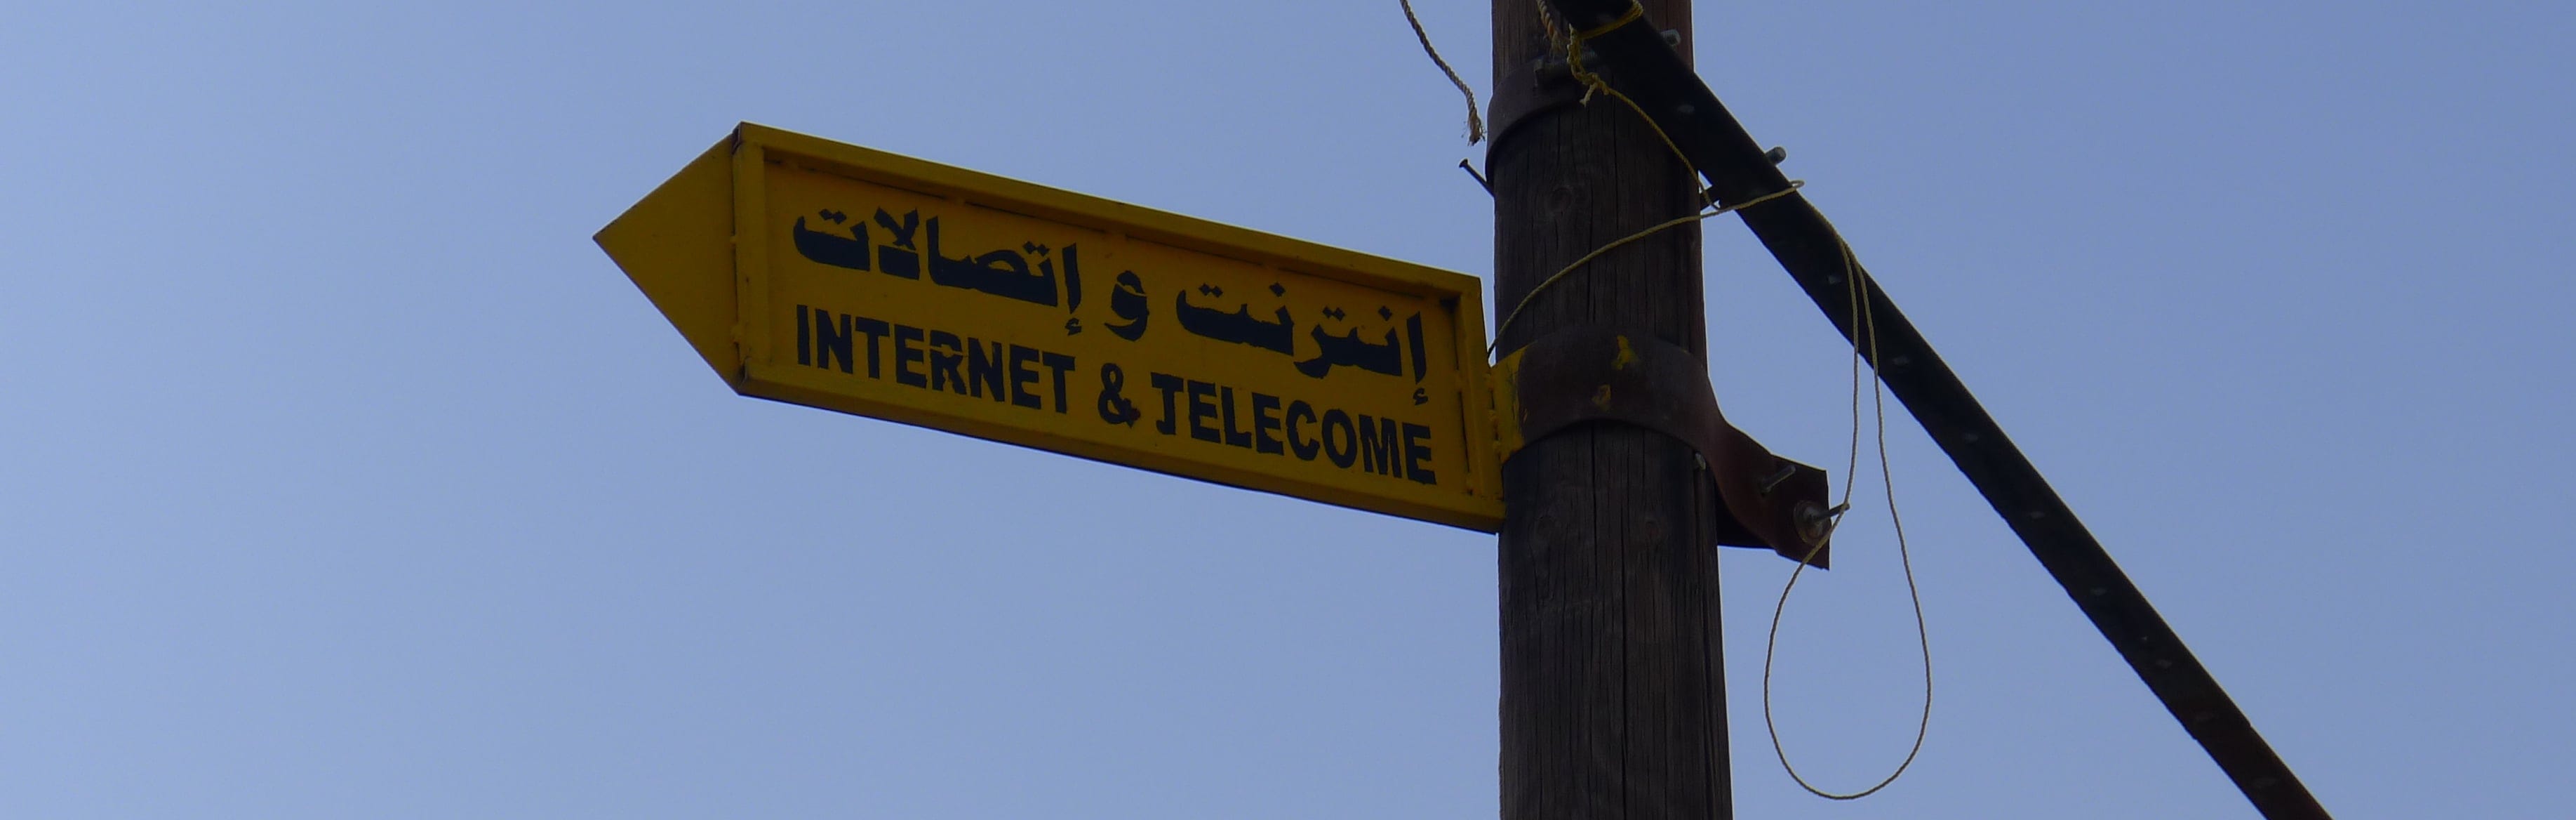 Internet & Telco sign